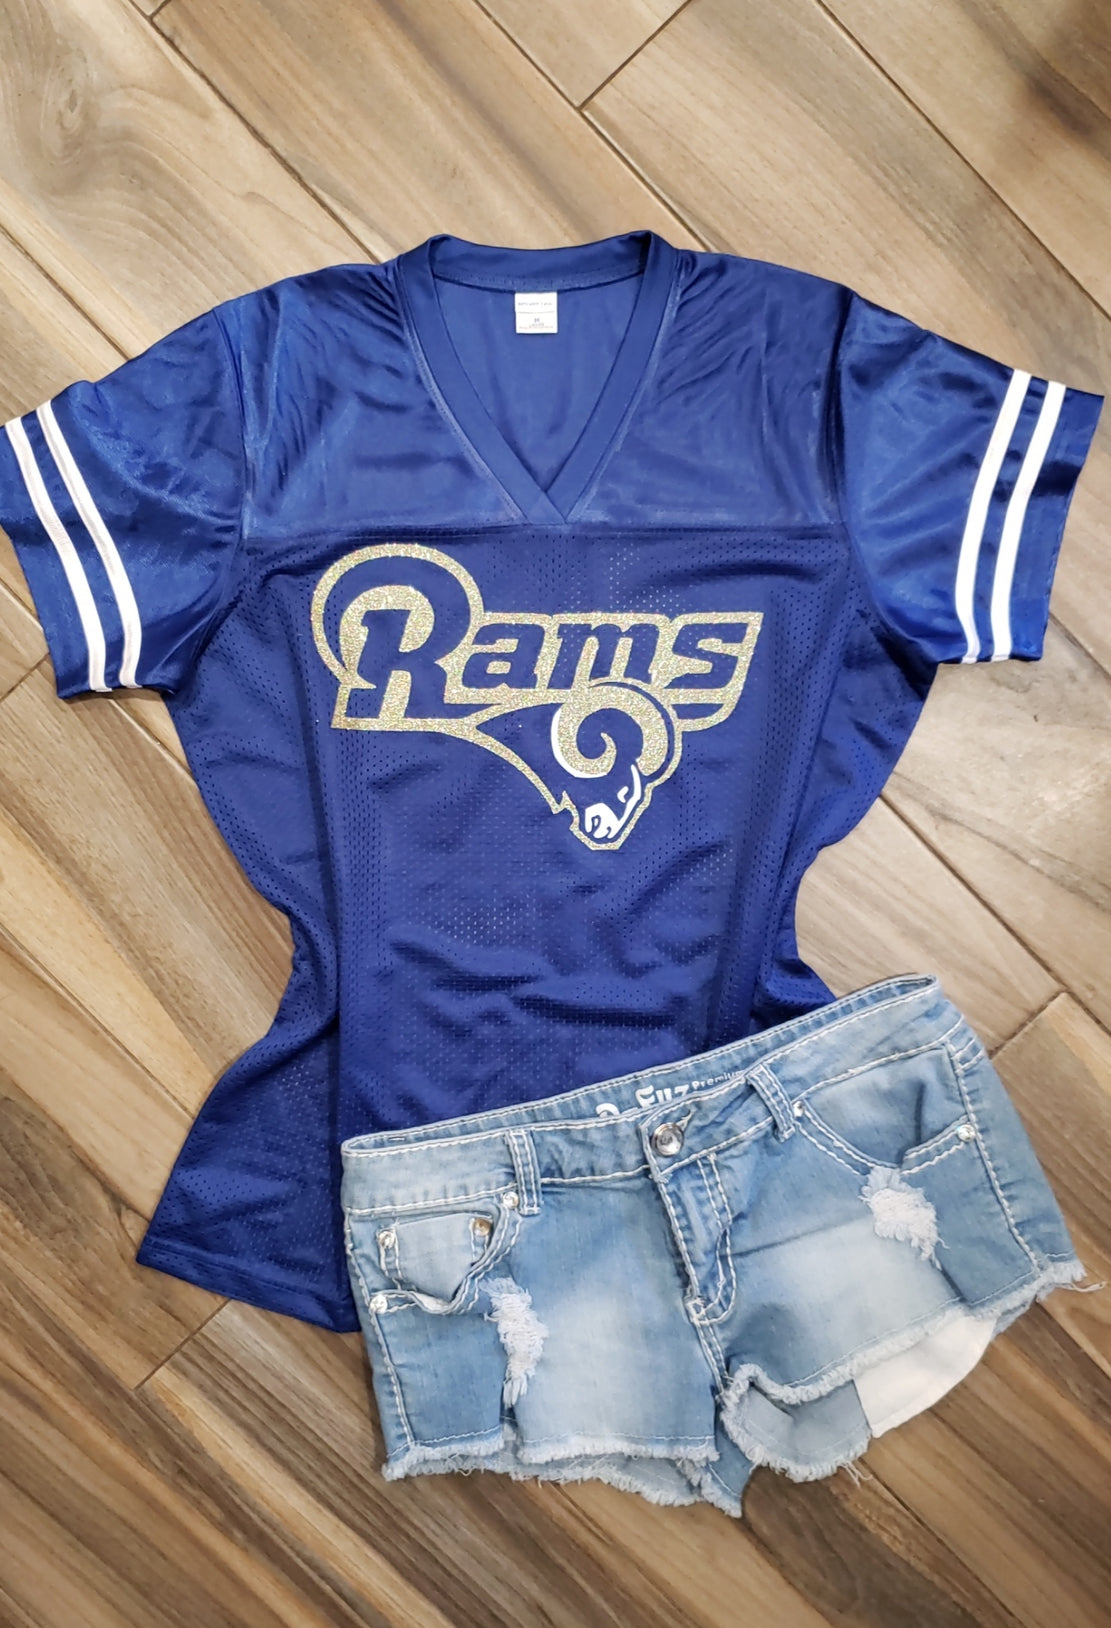 LA Los Angeles RAMS Shirt